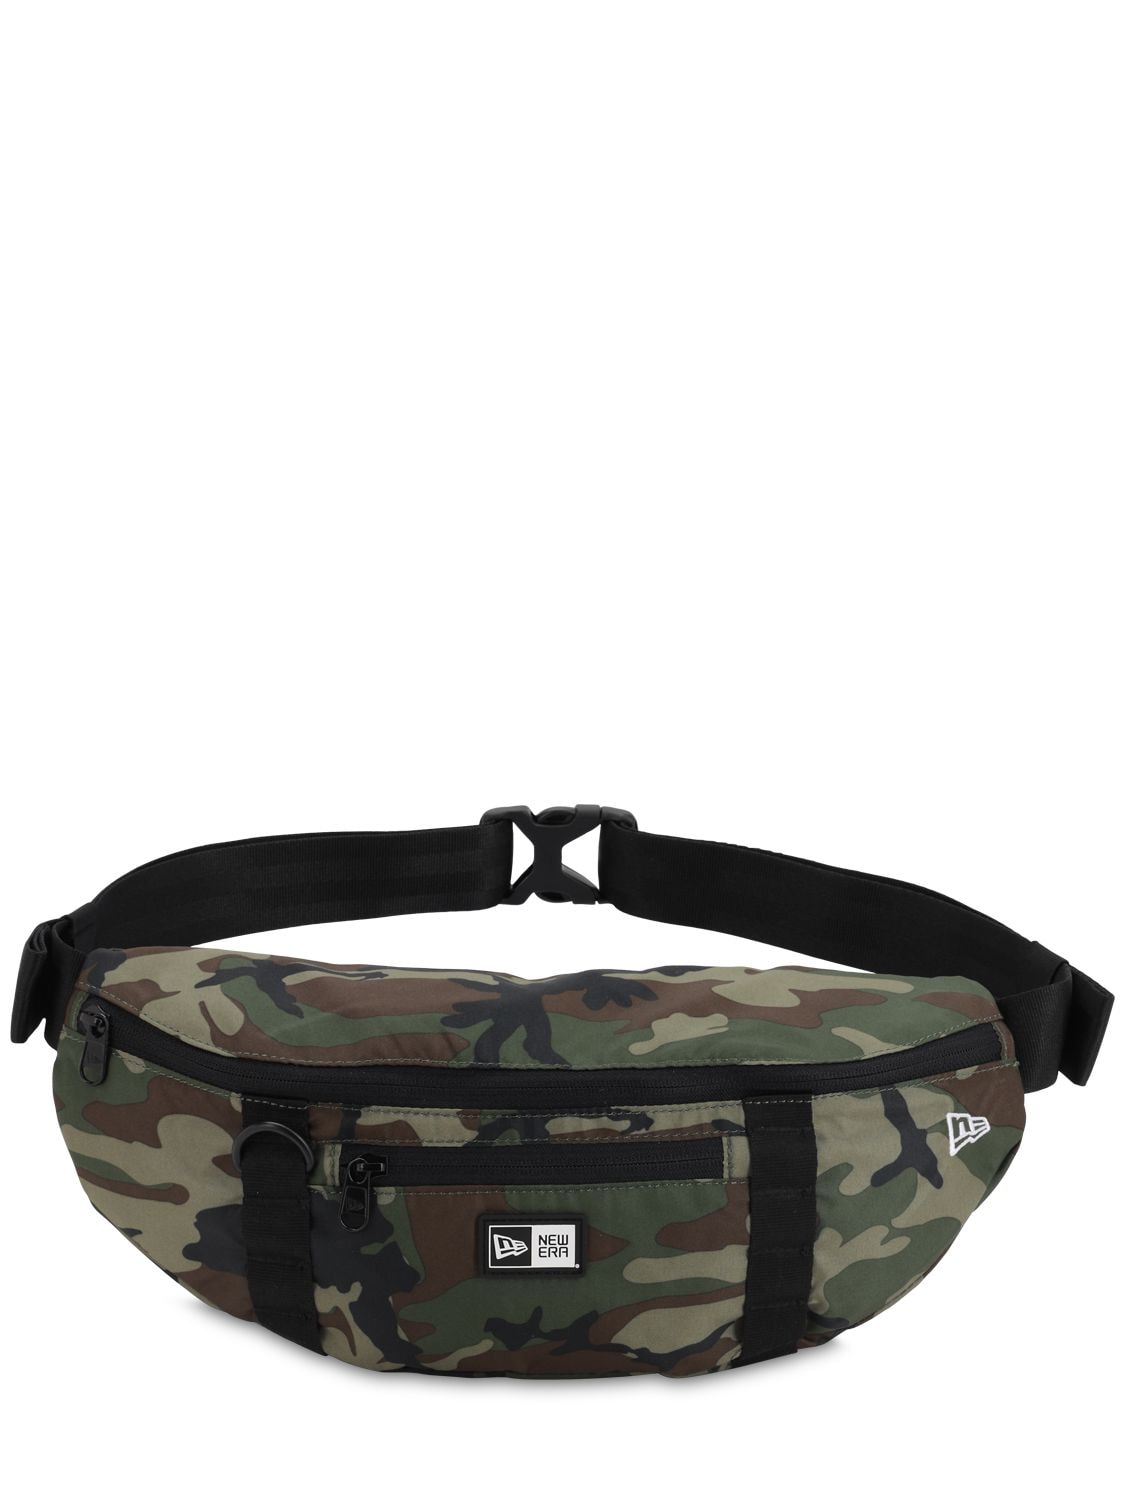 New Era Camouflage Techno Belt Bag